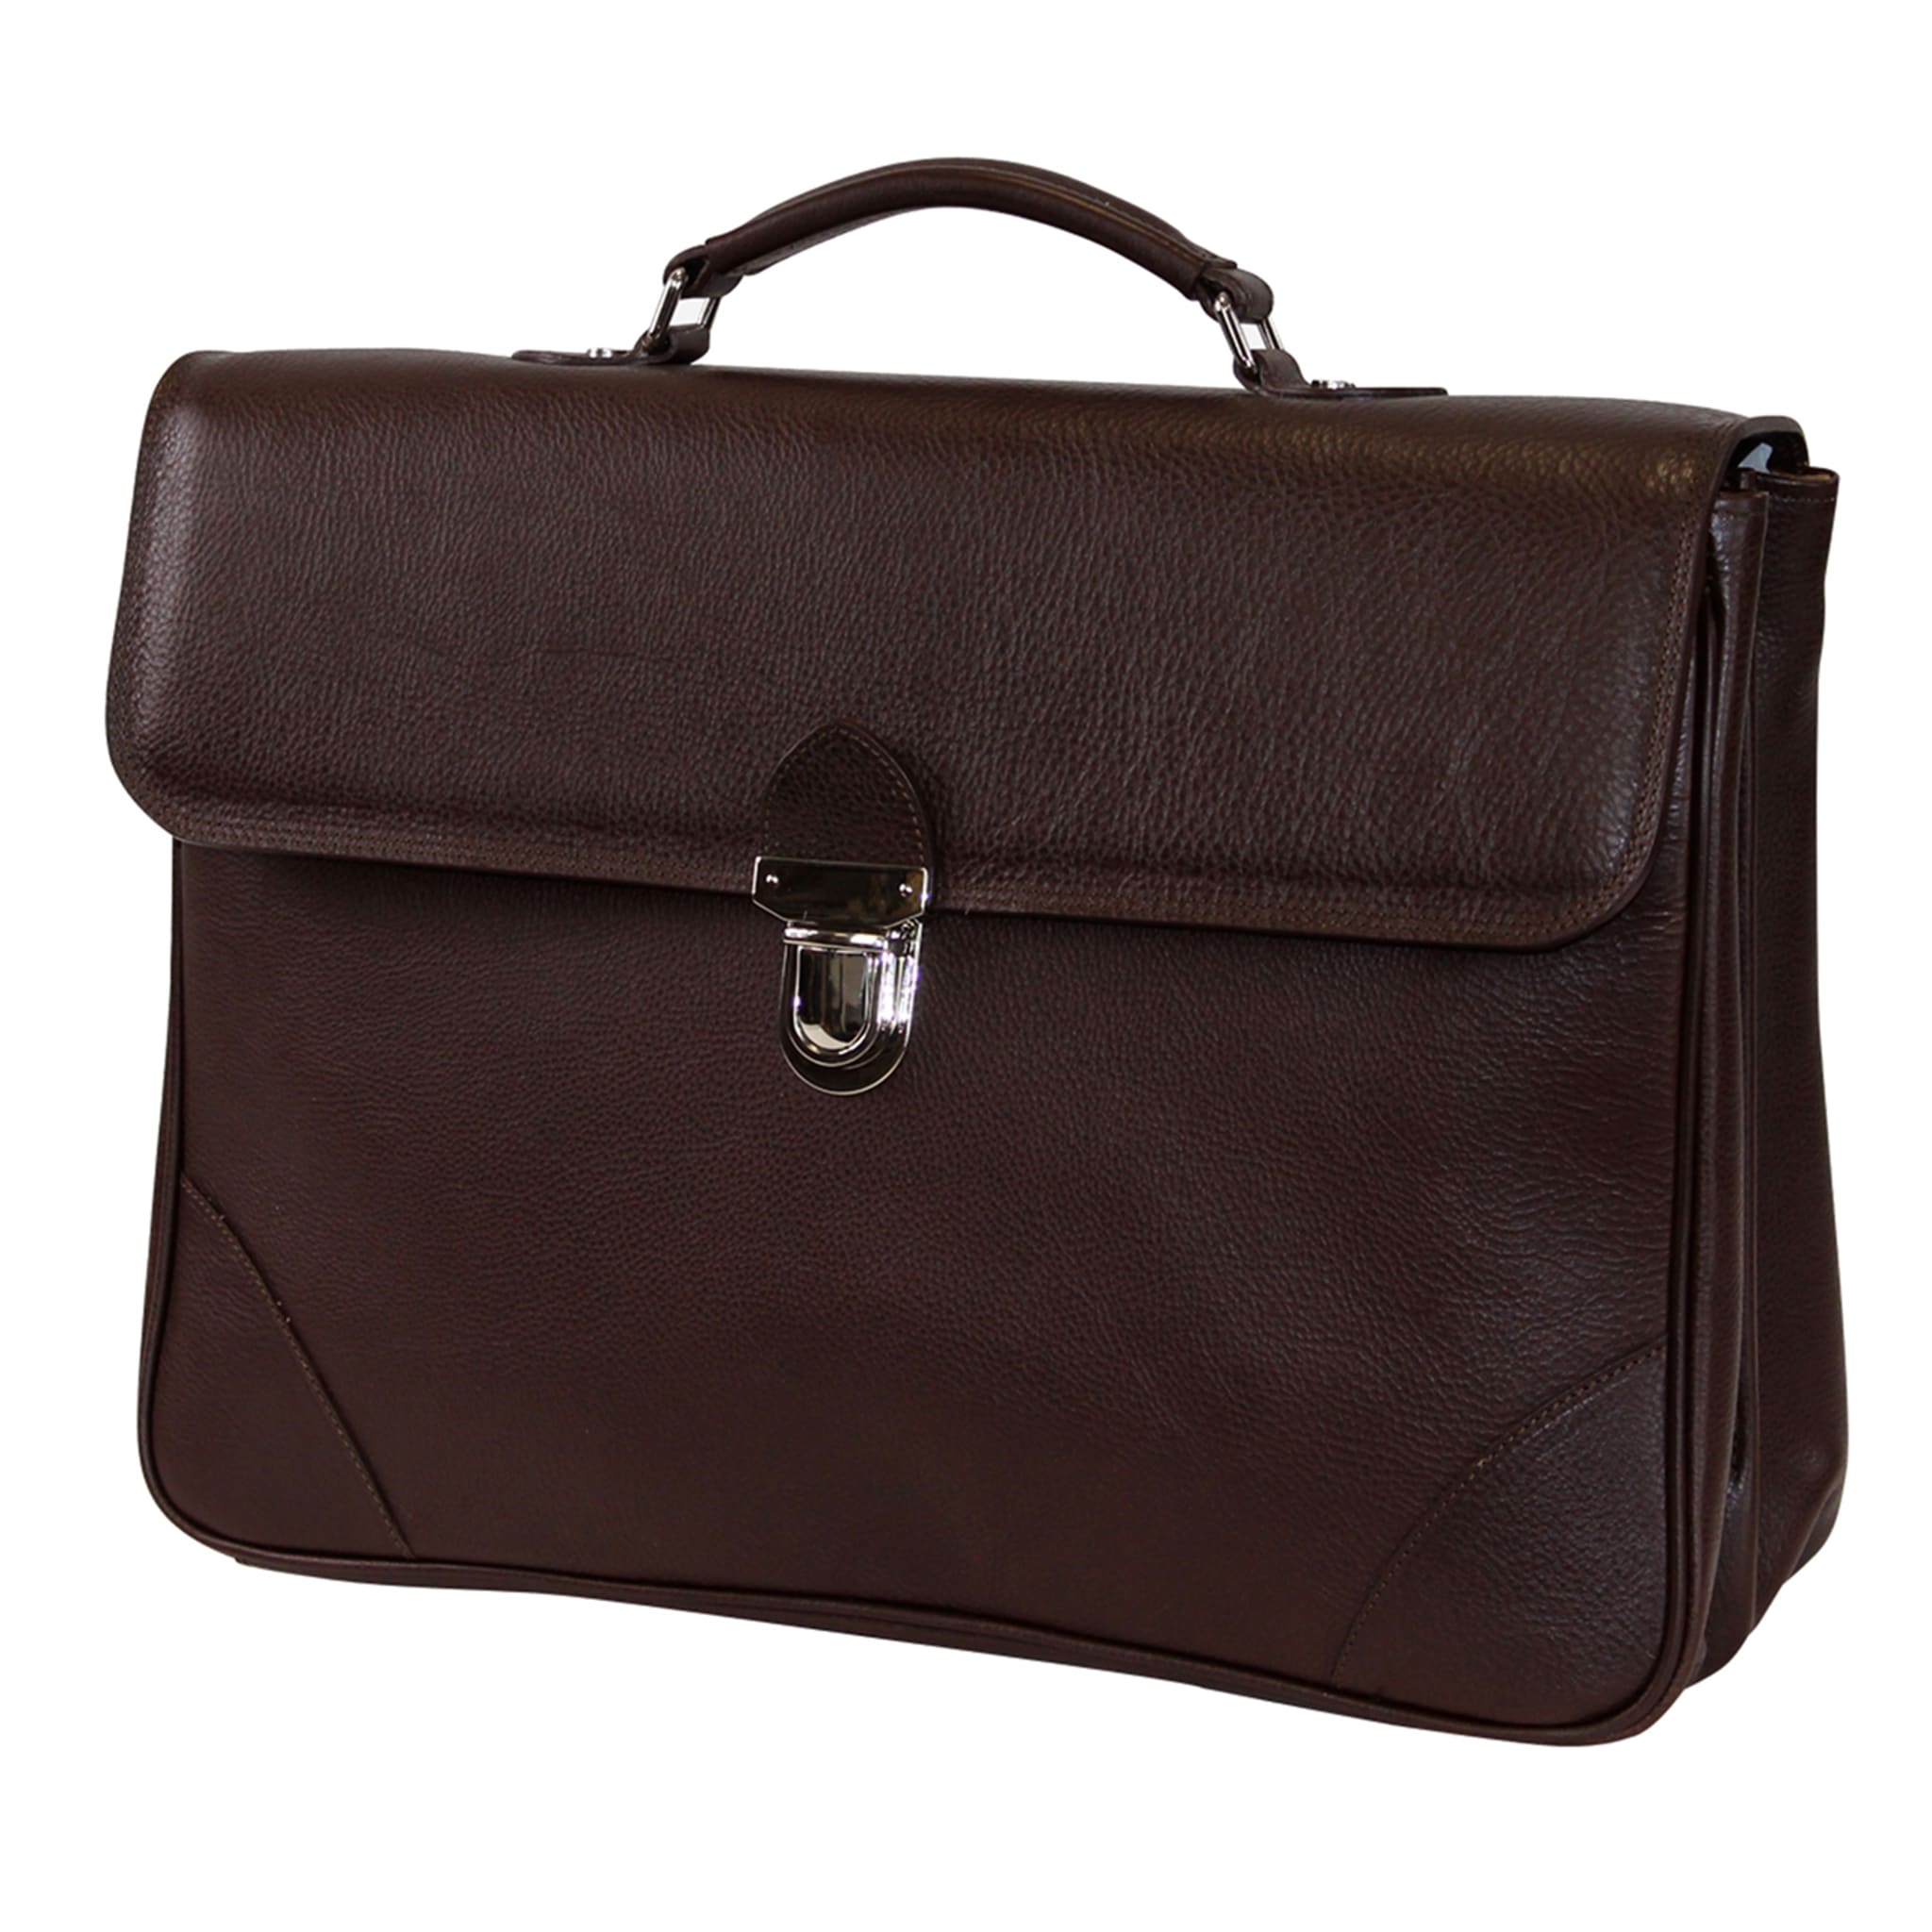 Medium Brown Briefcase - Main view